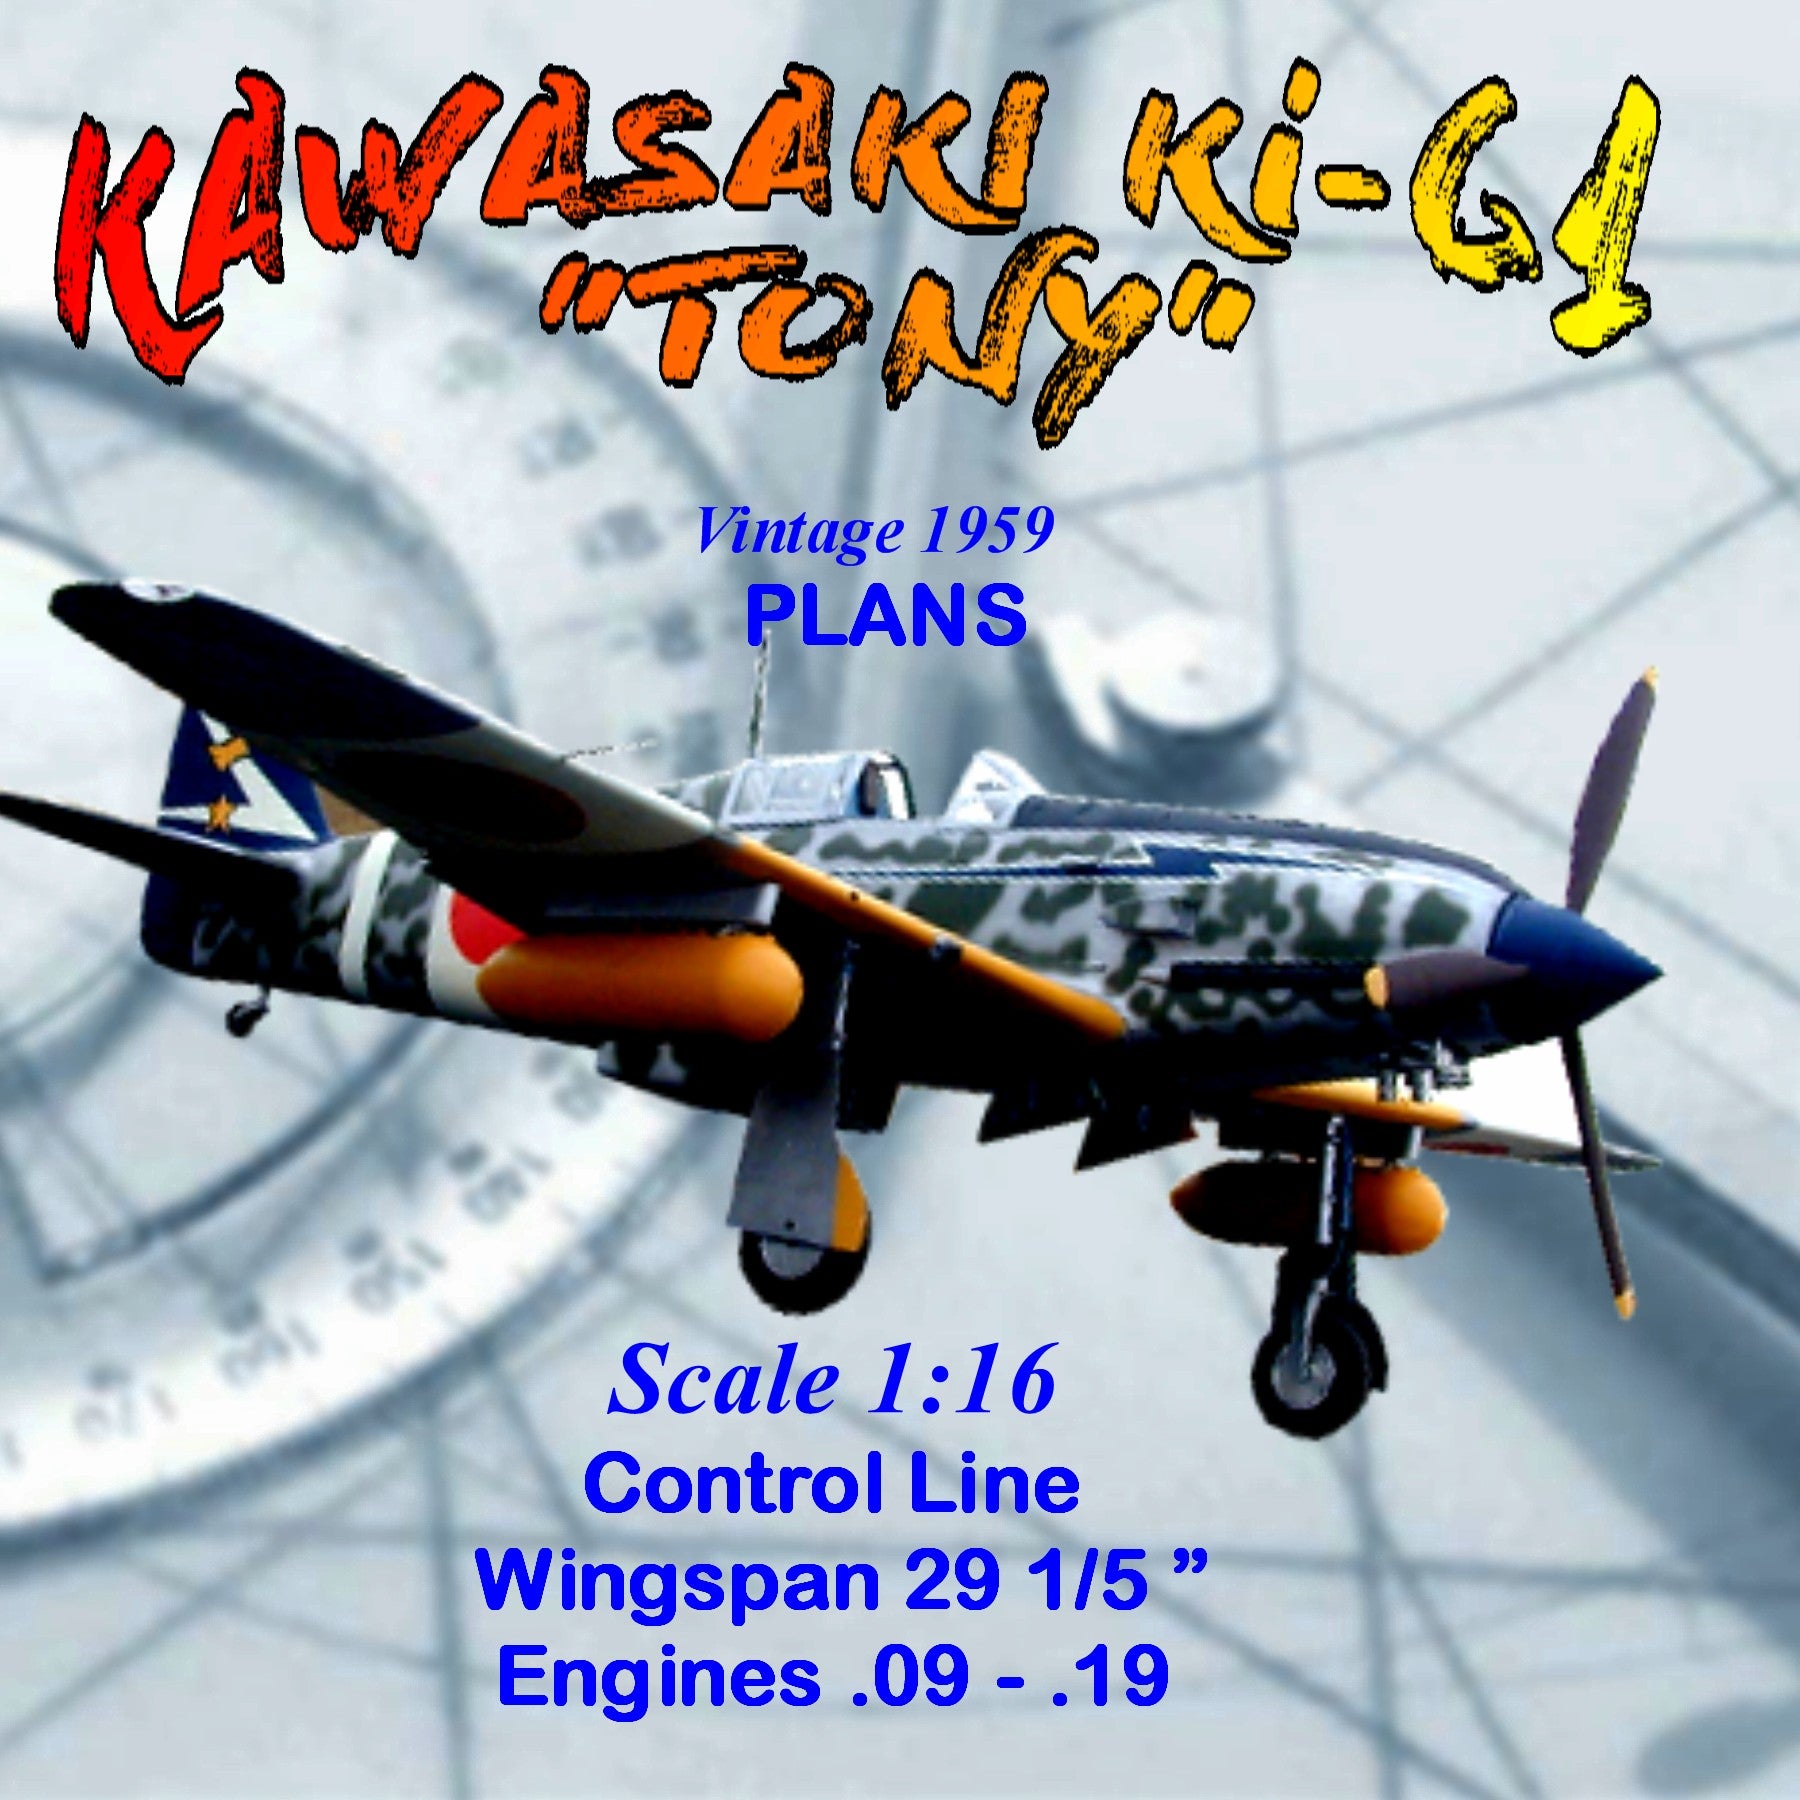 full size printed plans scale 1:16  control line kawasaki ki-61 “tony” sport flying